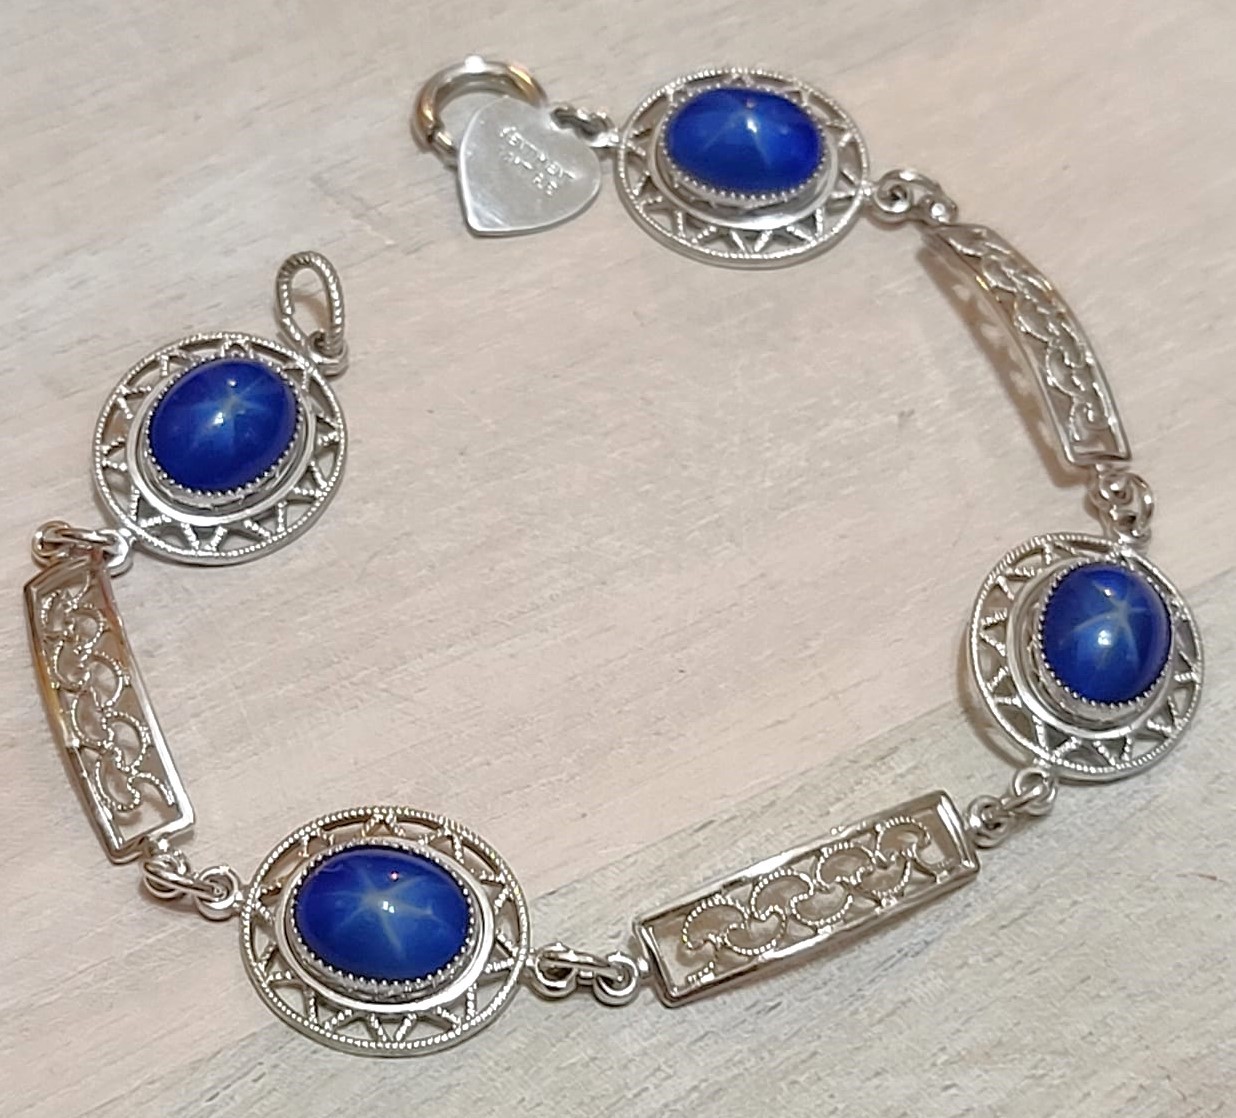 14KT GF bracelet, white gold filled GF with blue stone cabachons, filigree detail, vintage bracelet with heart charm